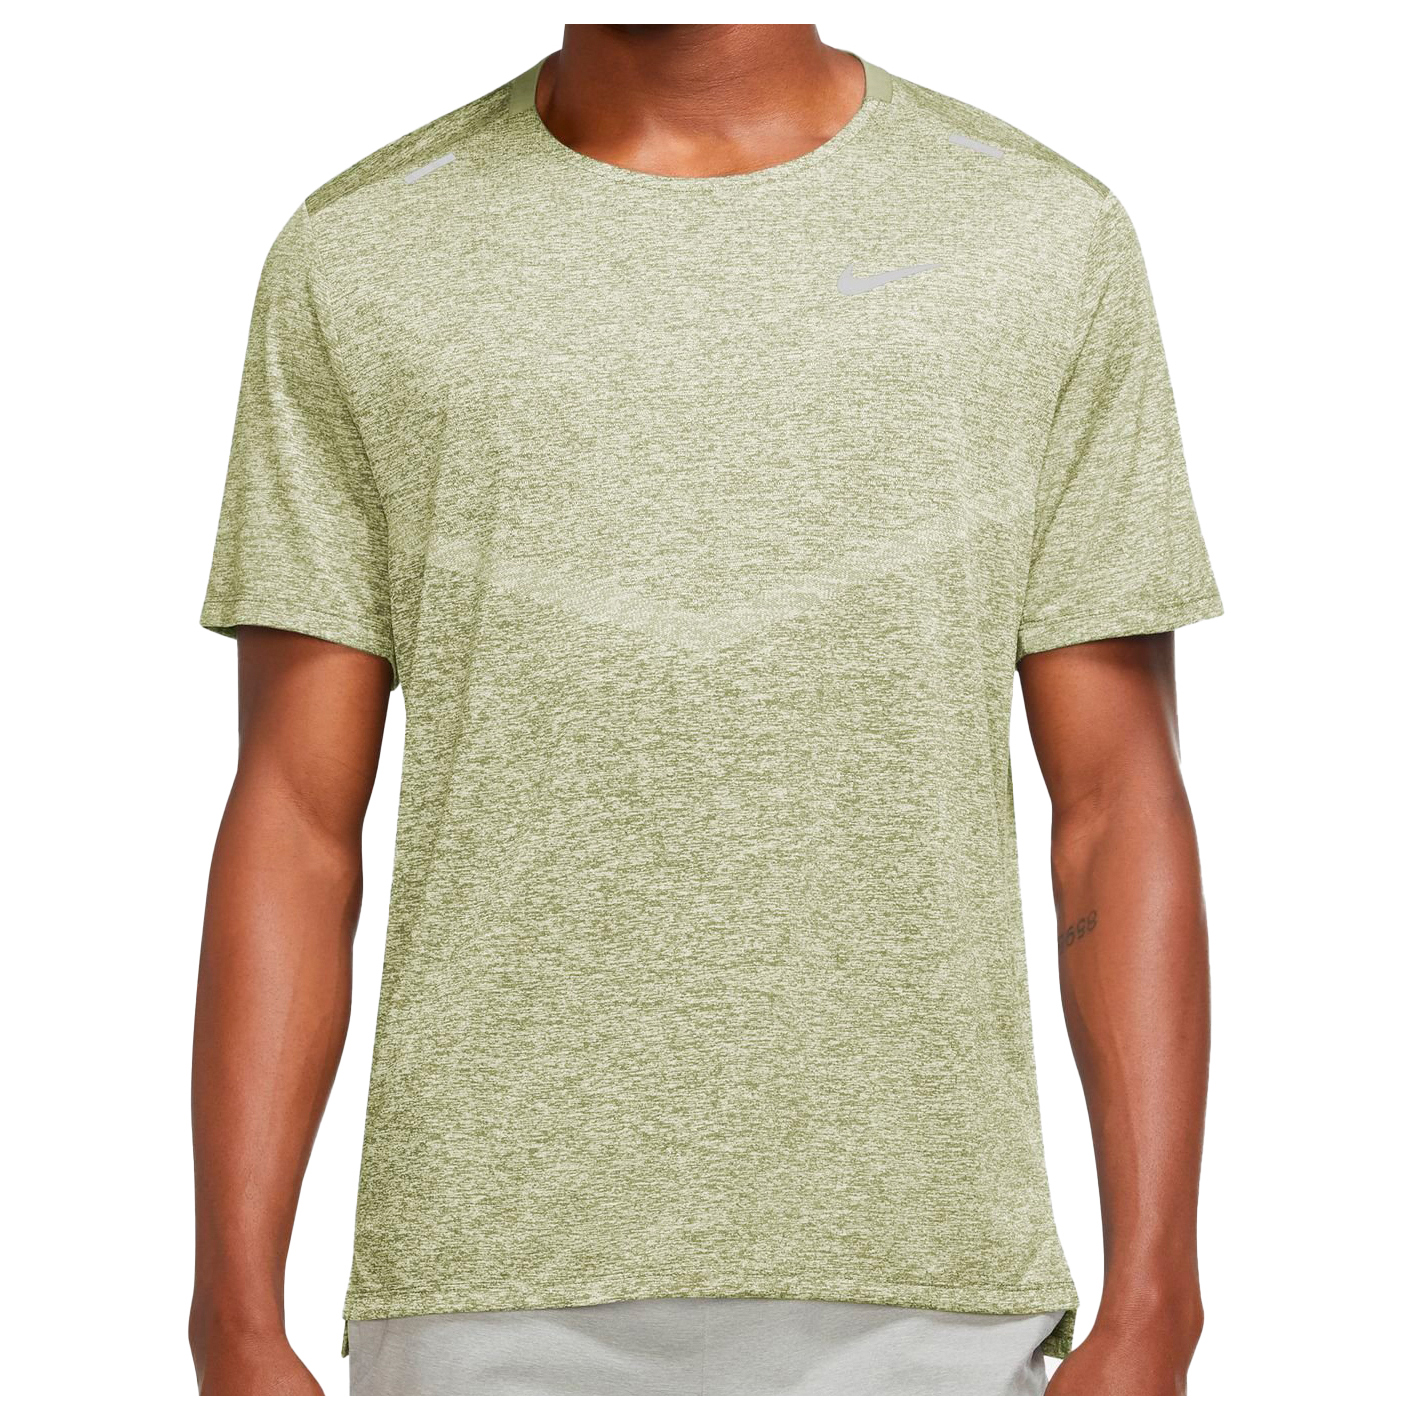 Функциональная рубашка Nike Rise 365 Dri FIT S/S, цвет Olive Aura/Heather/Reflective Silver шорты nike women s one dri fit high rise short цвет vapor green black